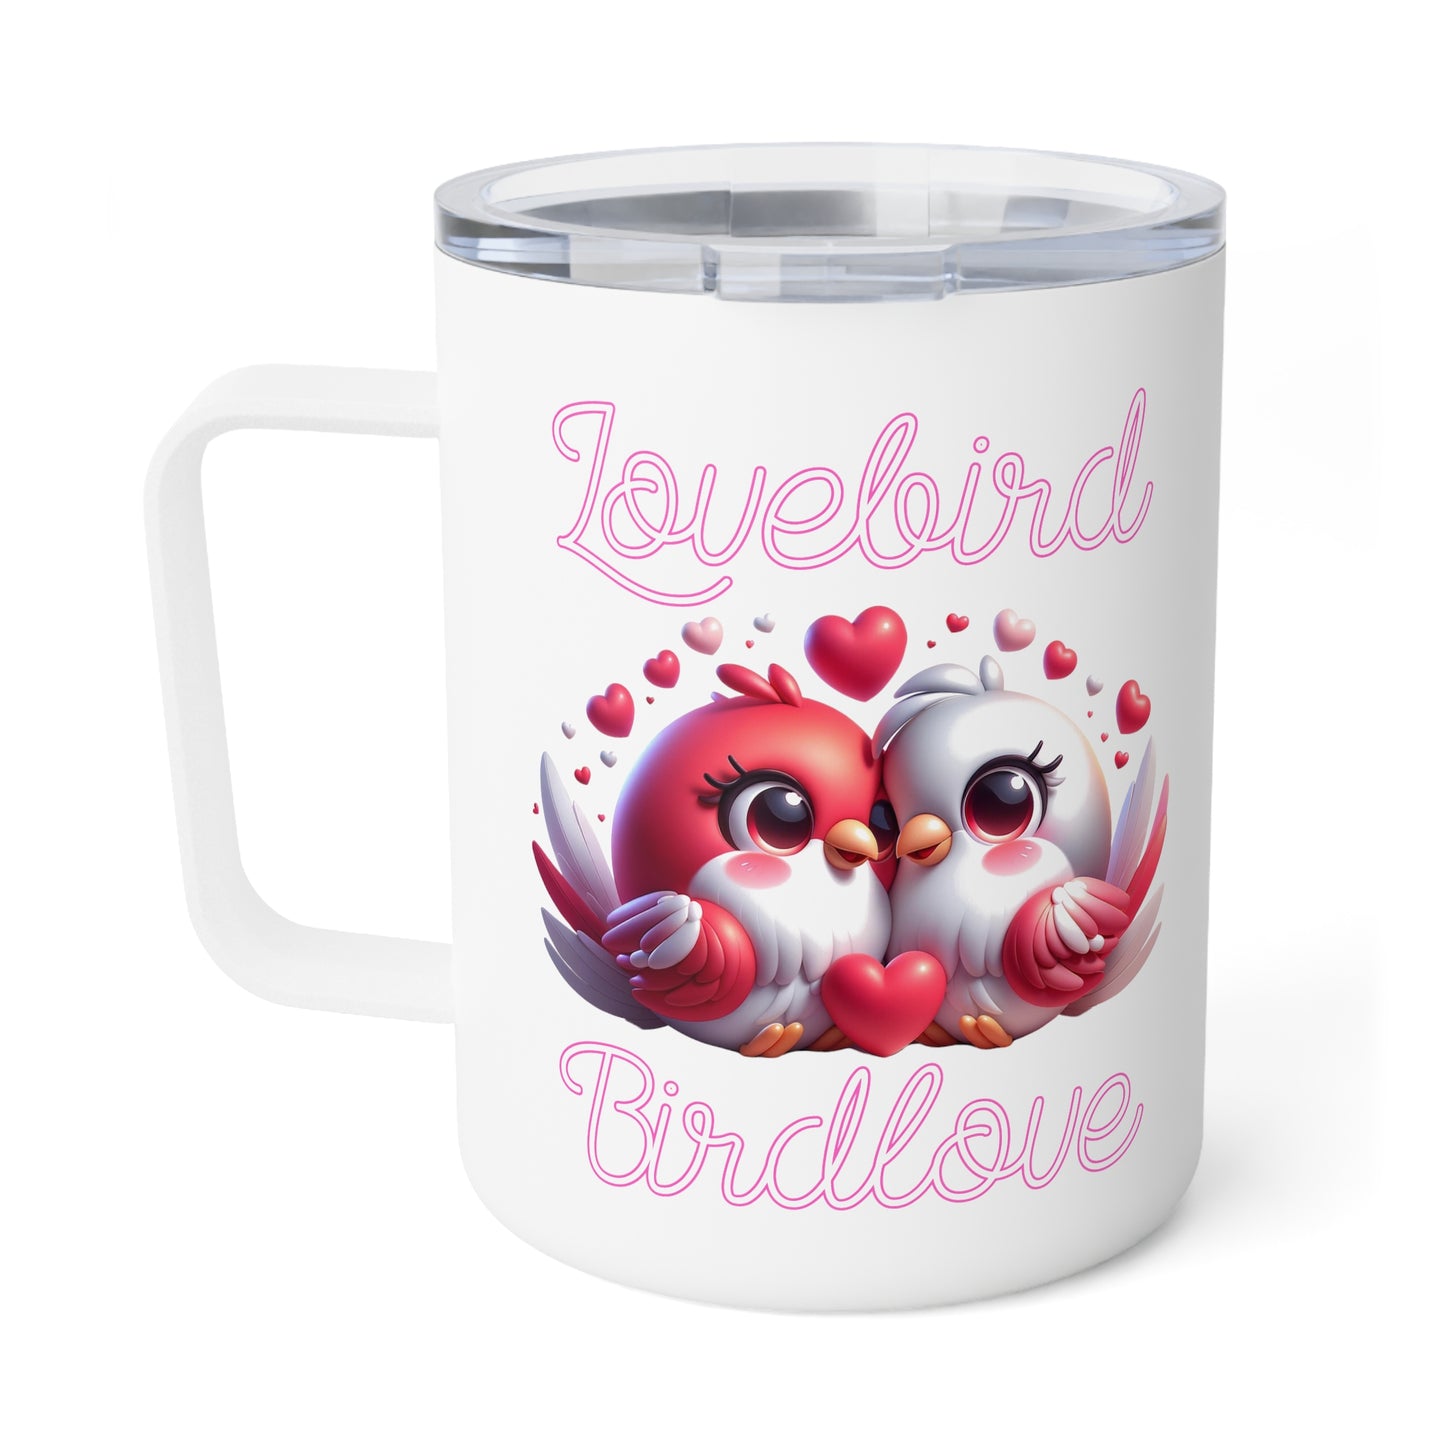 Lovebird Birdlove Insulated Coffee Mug, 10oz